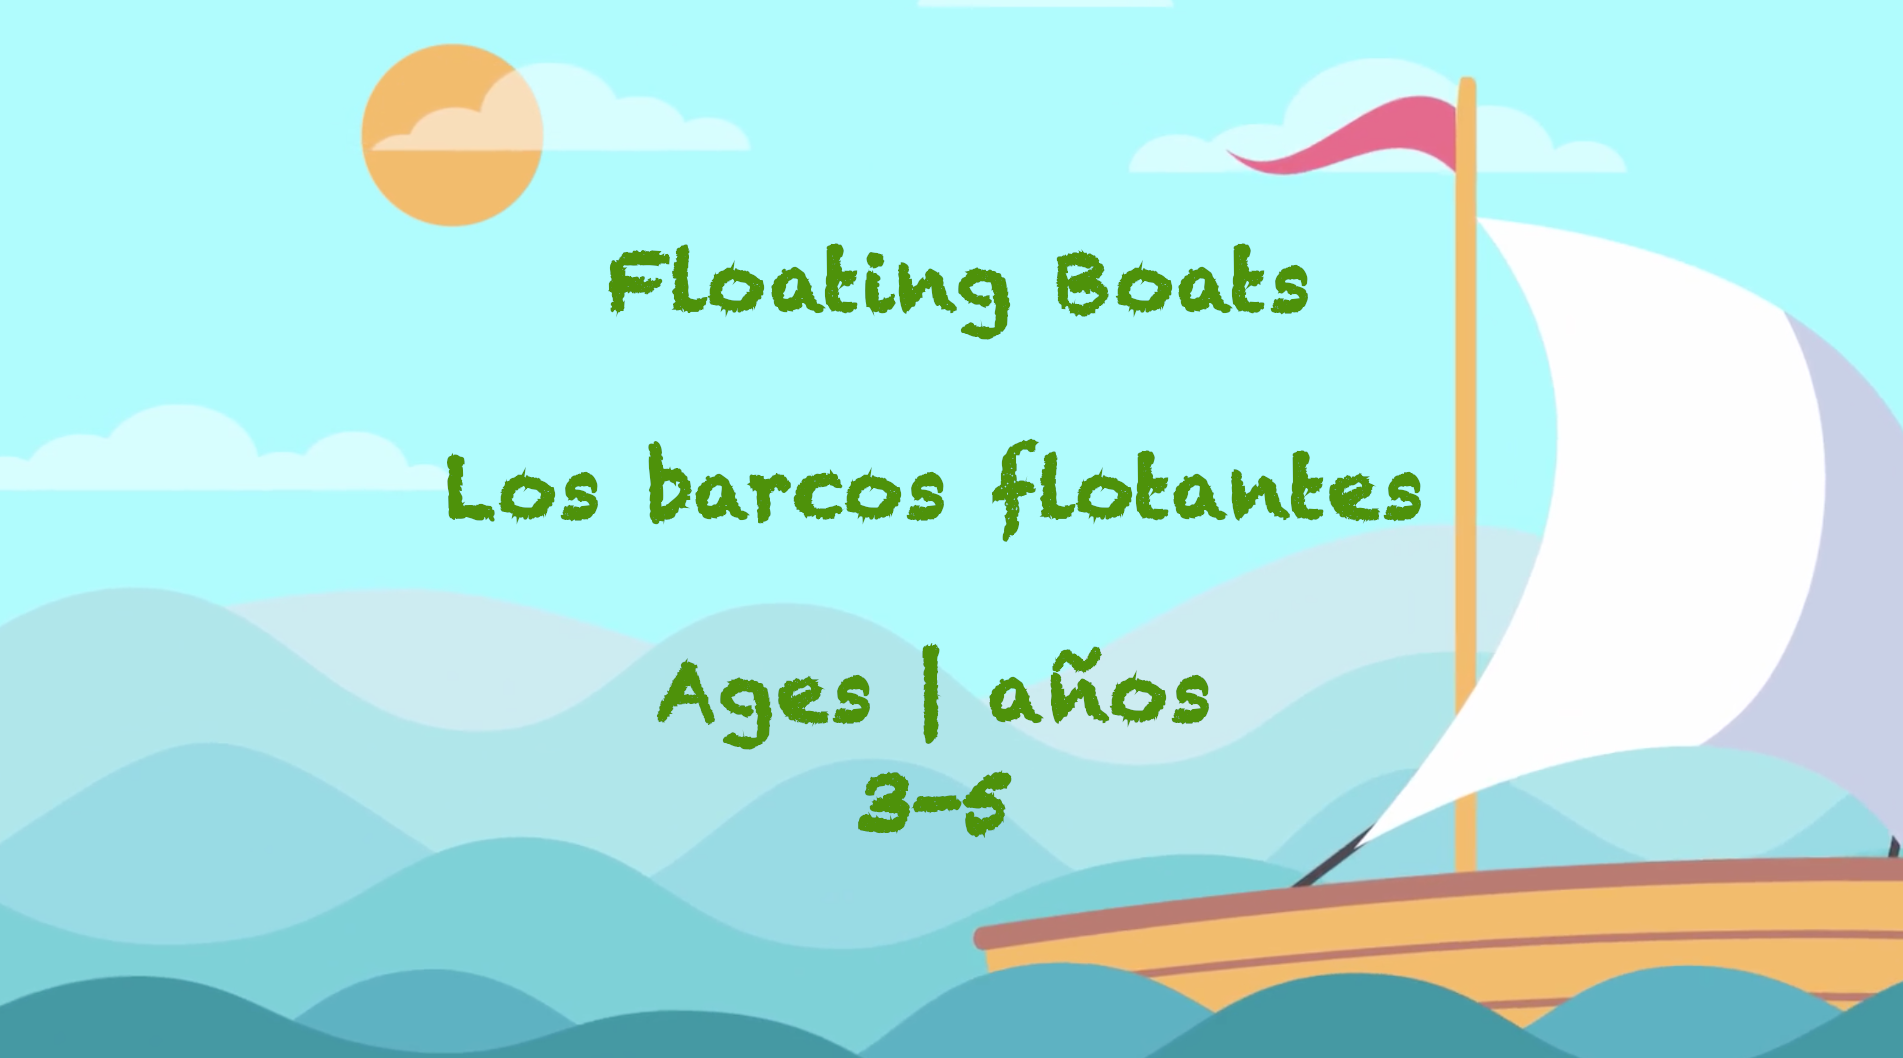 Semana 51 Tarjeta de barcos flotantes Edades 3-5